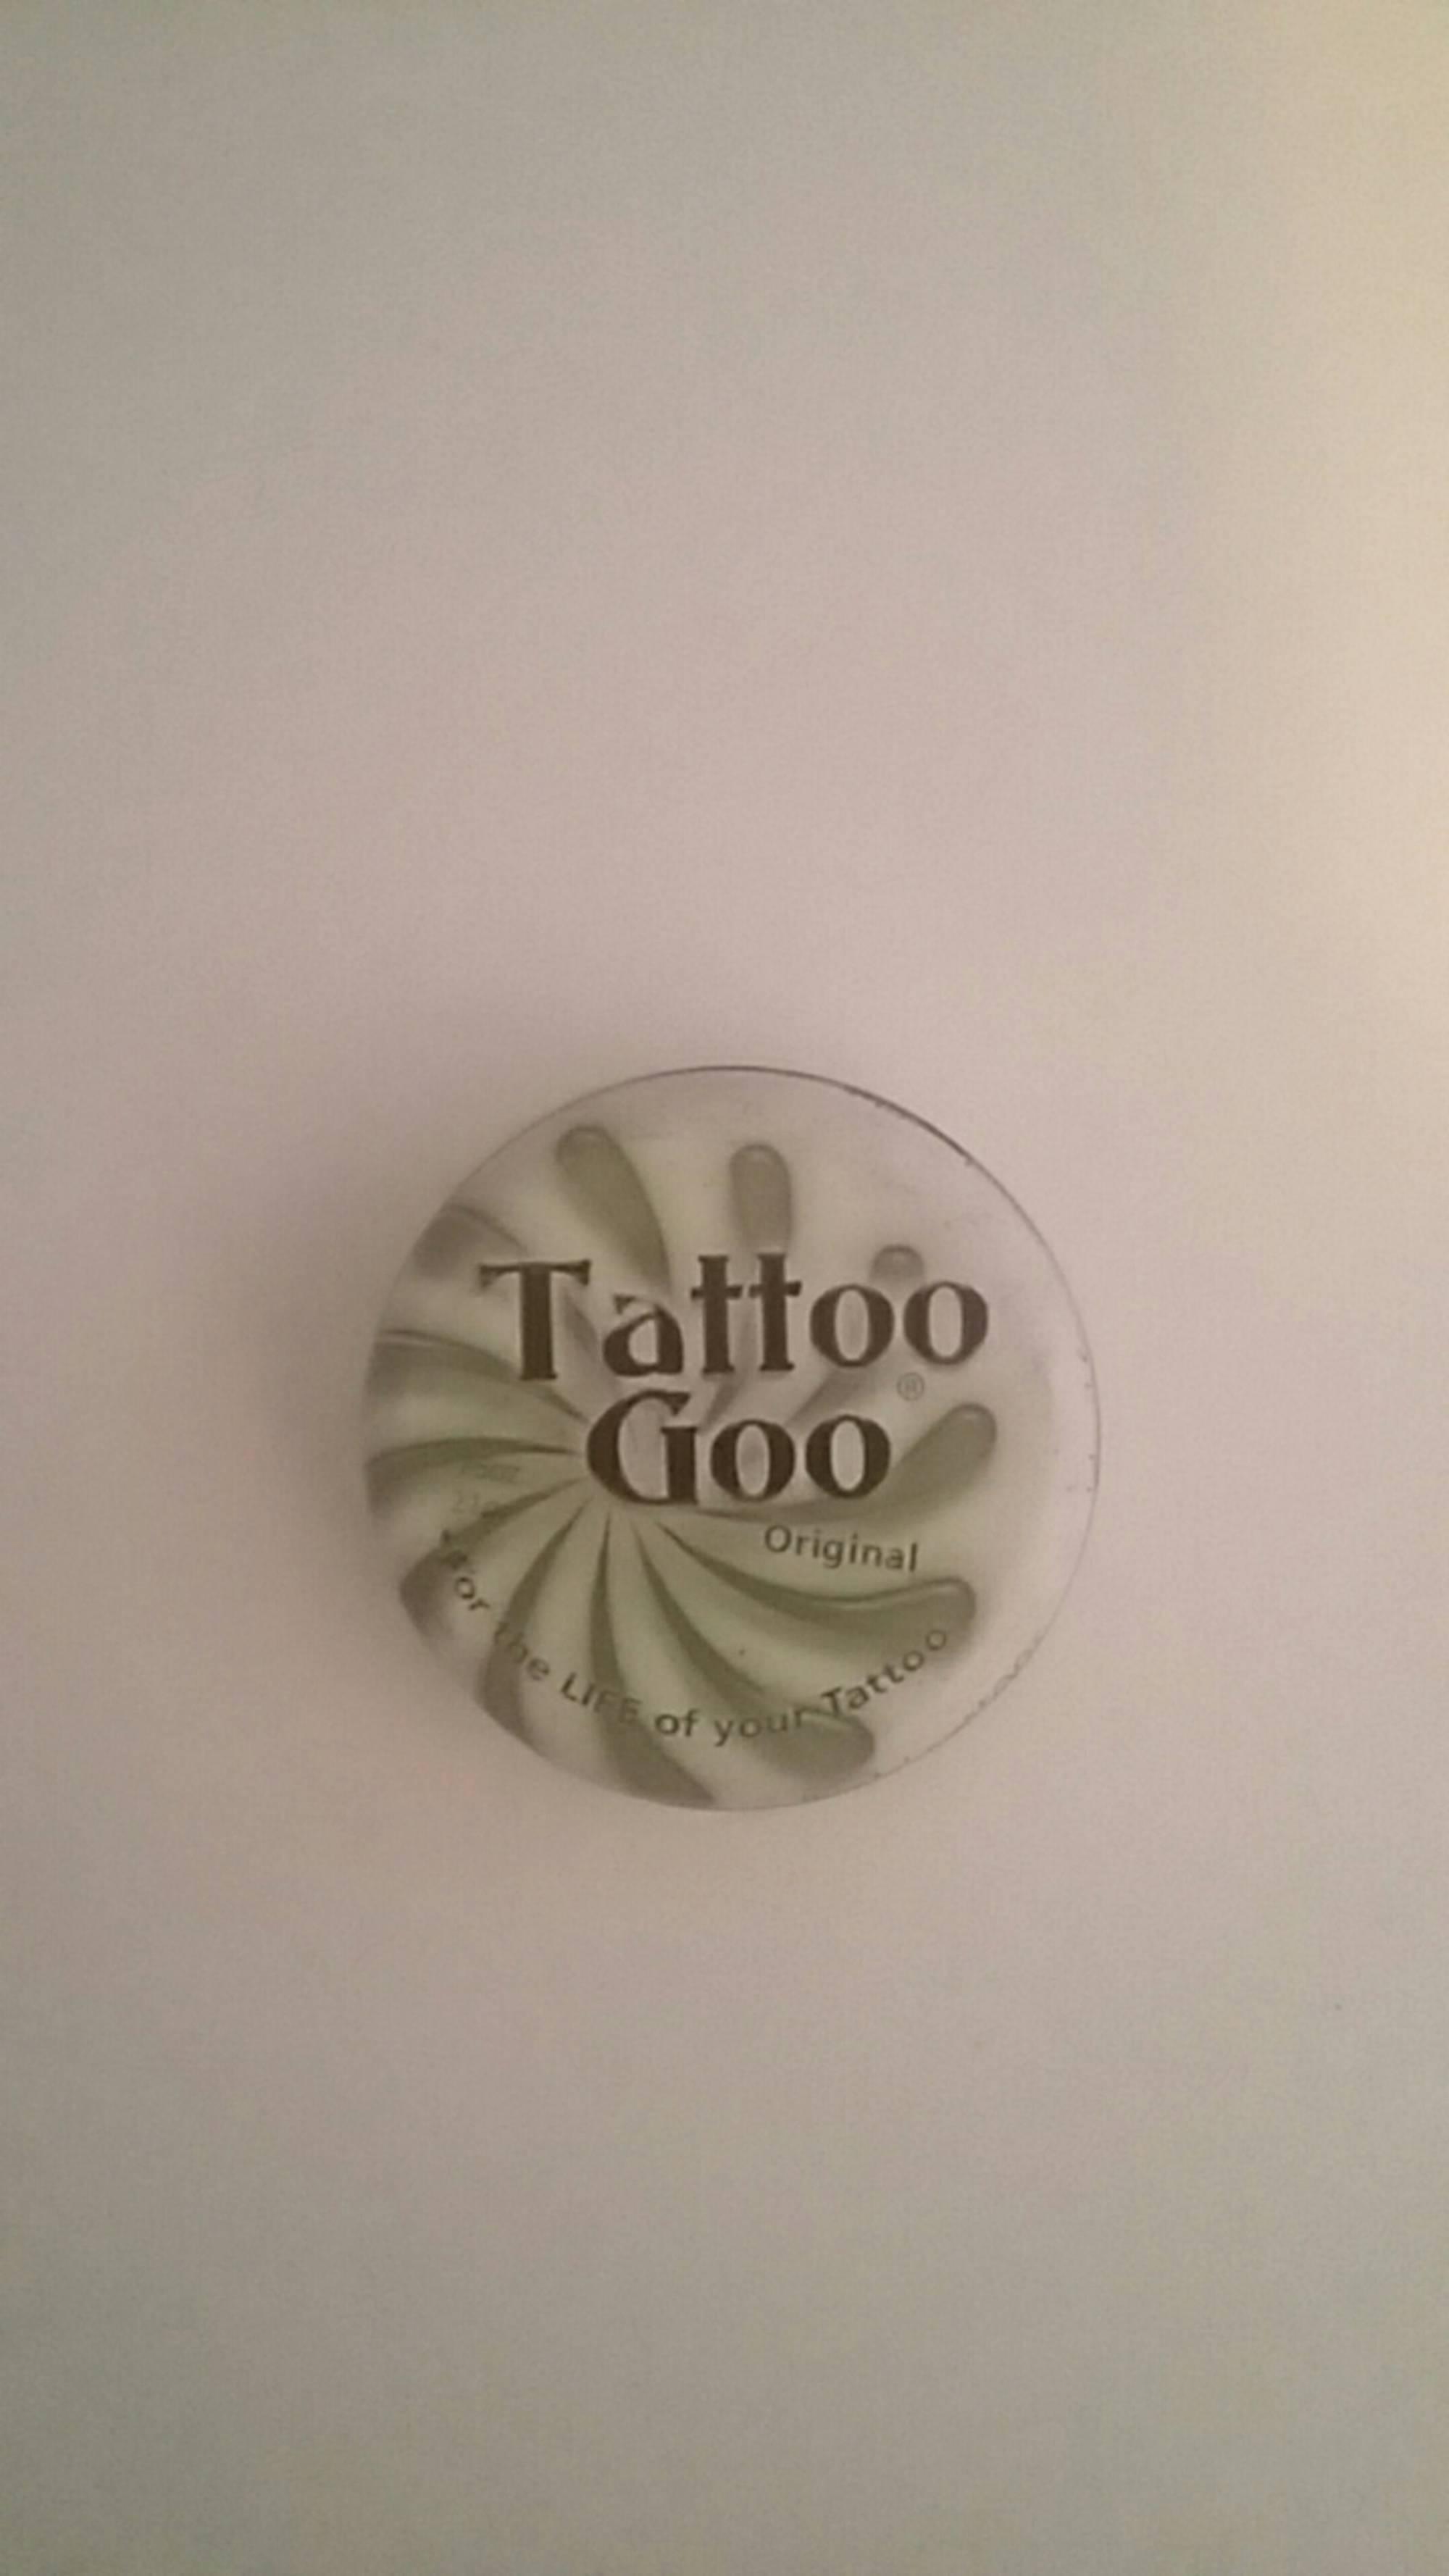 TATTOO GOO - Original for the life of your tattoo